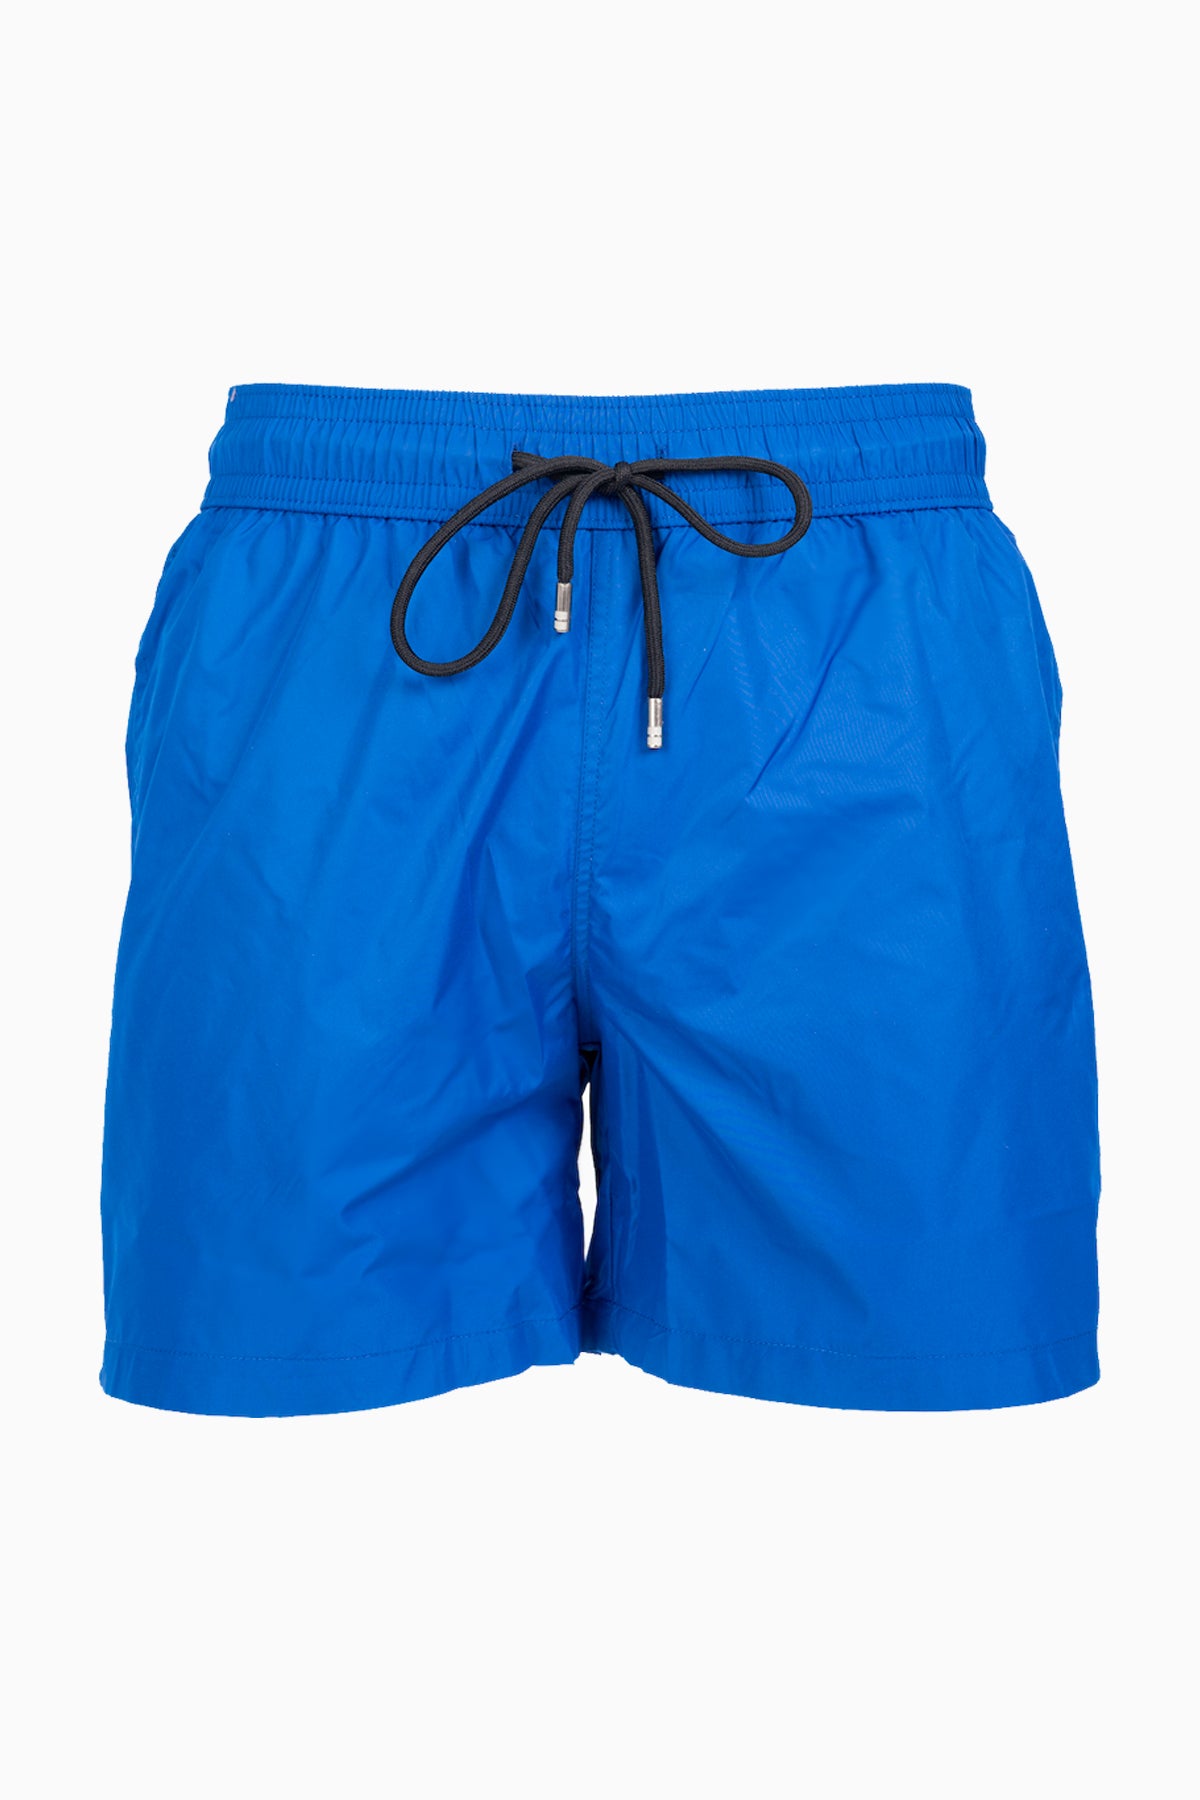 Men's Shorts - Royal Blue